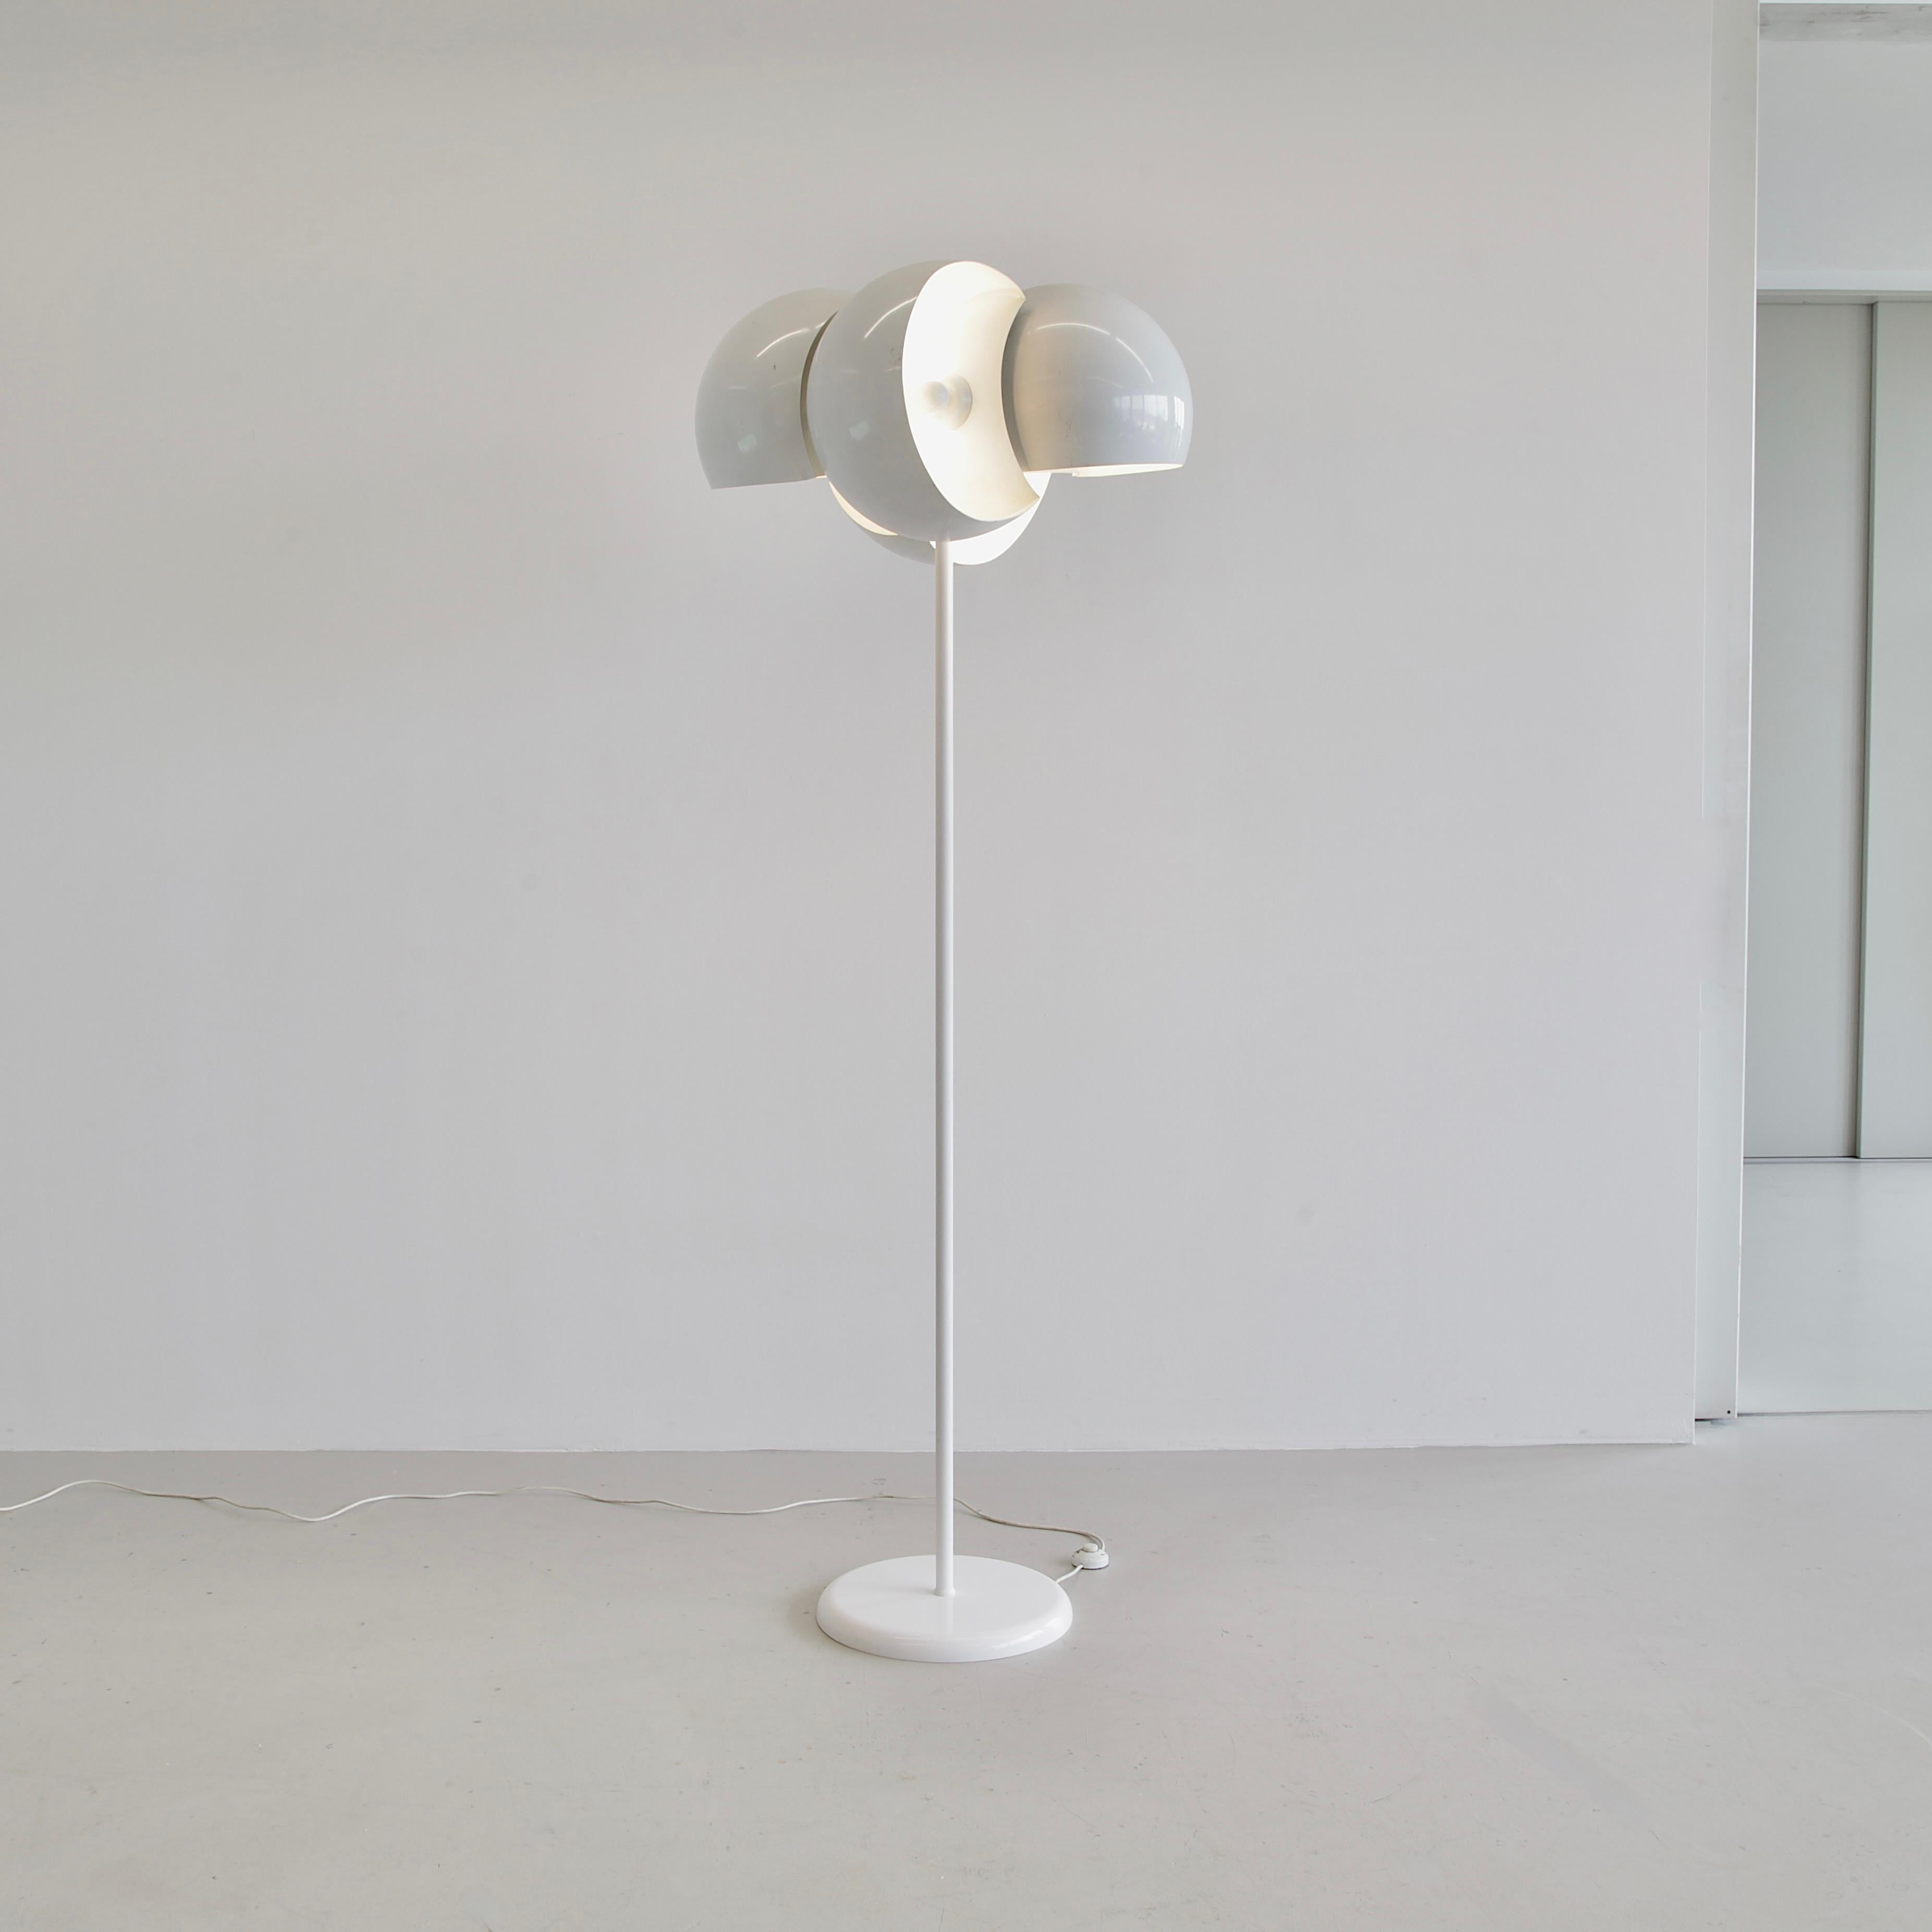 Late 20th Century GIUNONE Floor Lamp designed by Vico MAGISTRETTI for Artemide, 1970 For Sale